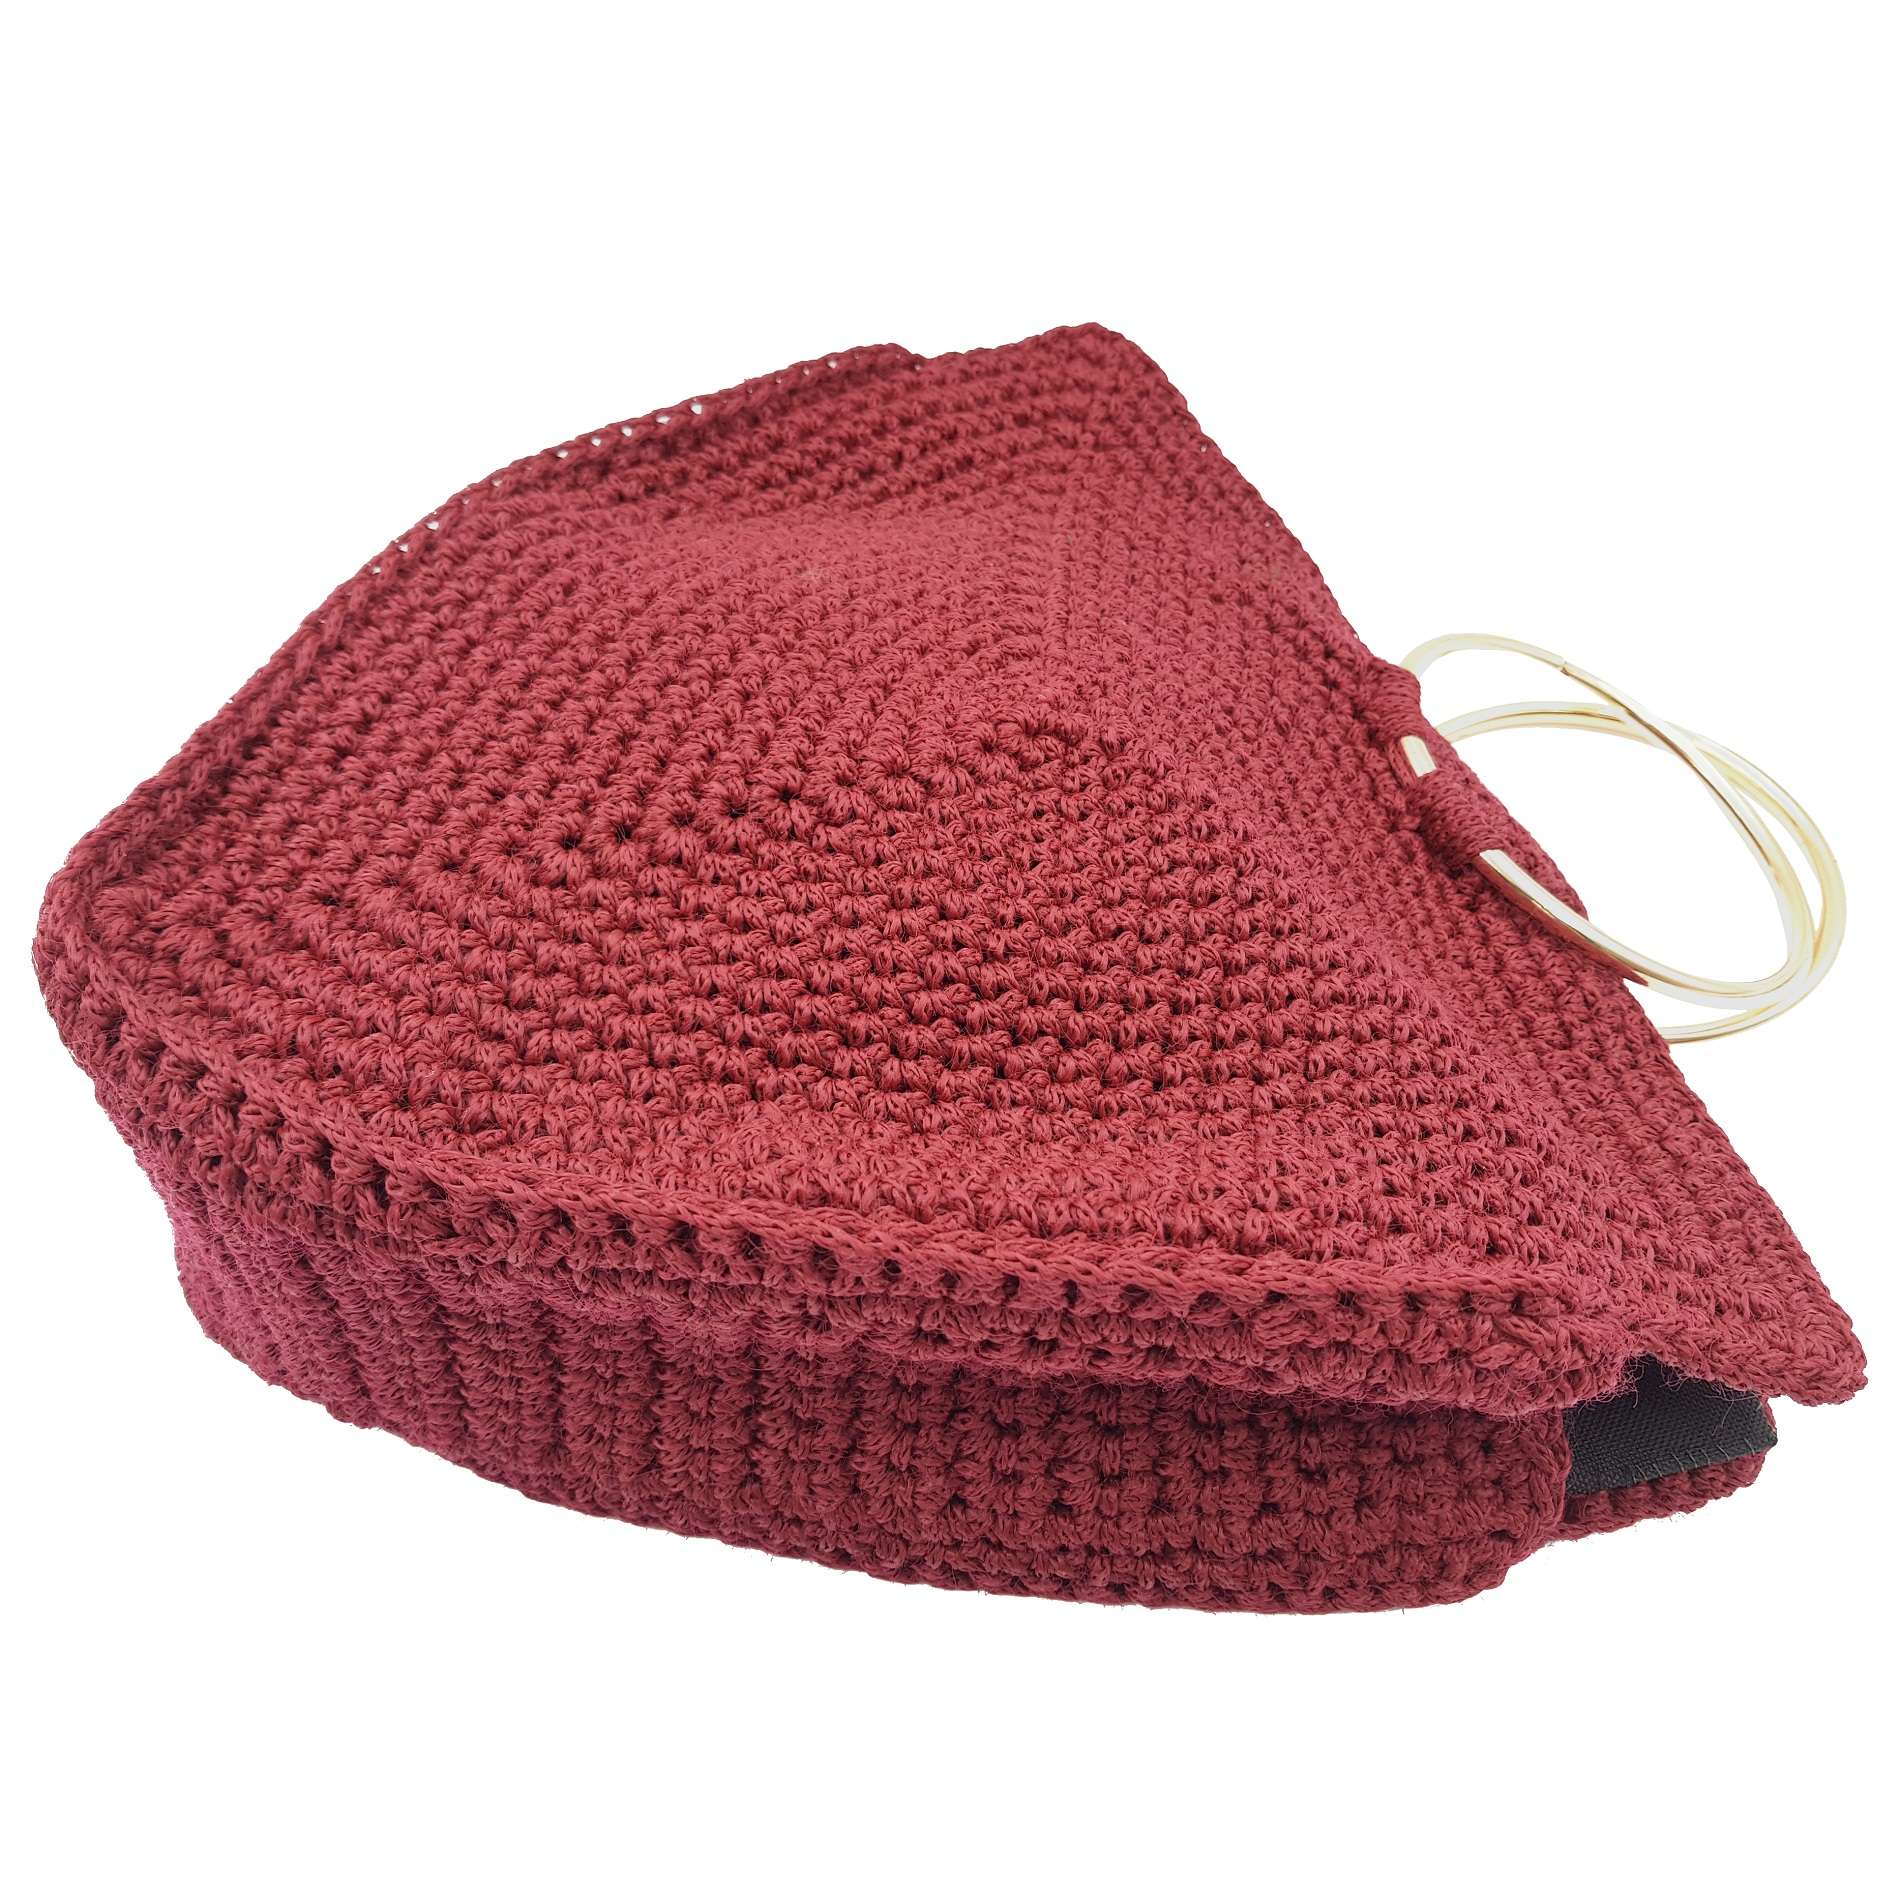 Crochet Triangle Bag